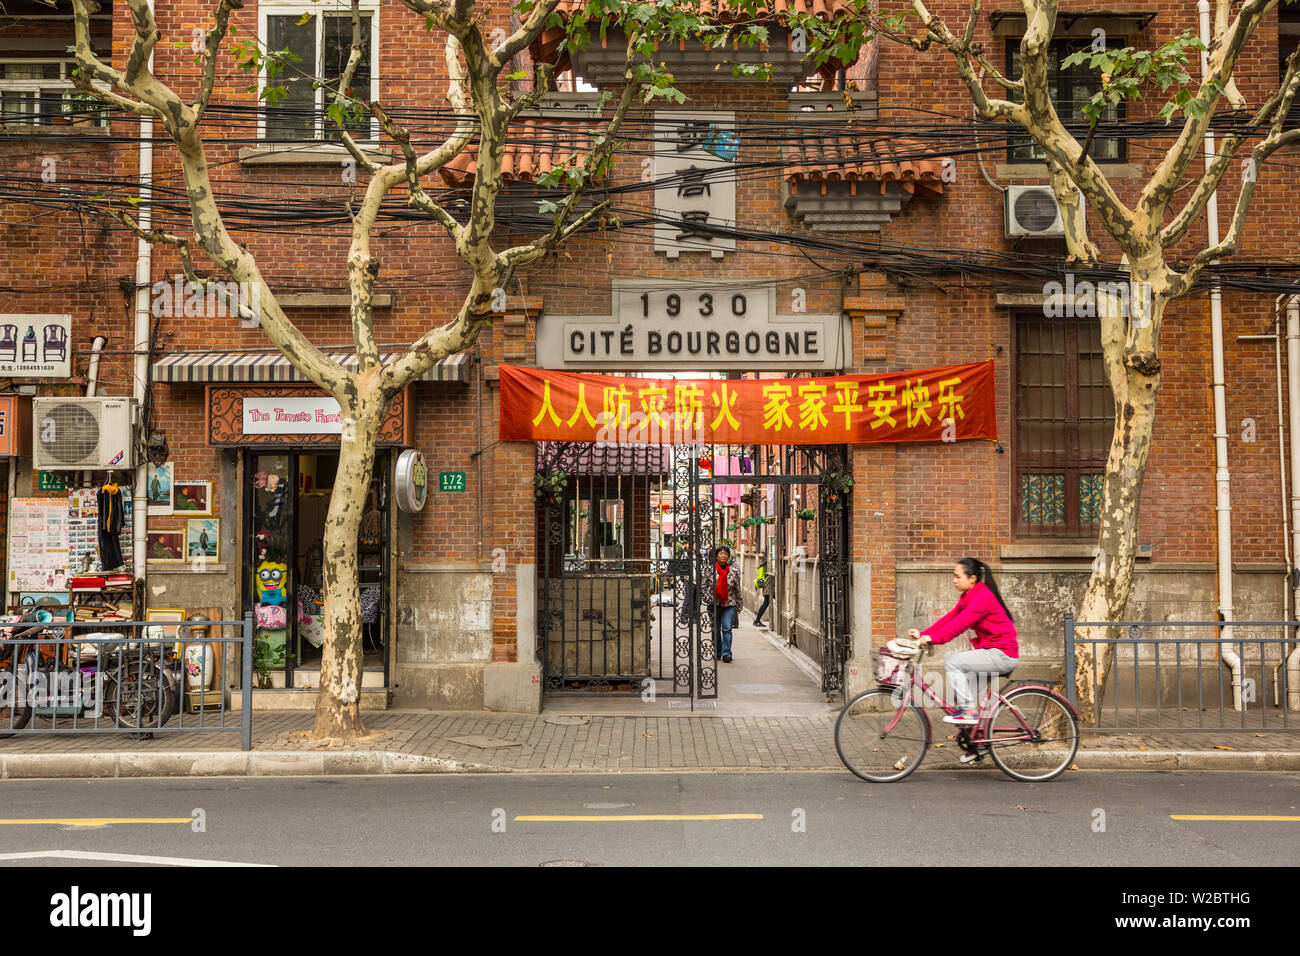 Gateway to Shikumen housing in the French Concession, Shanghai, China Stock Photo